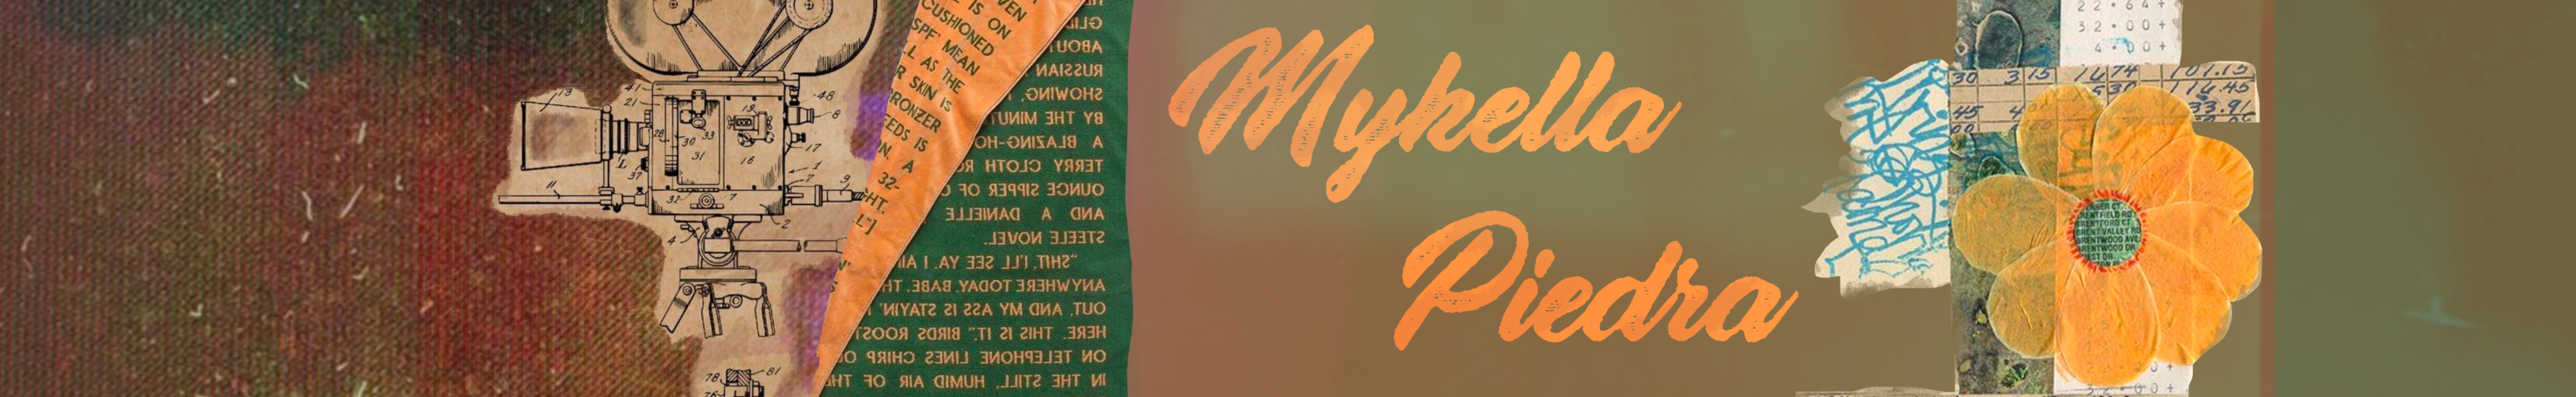 Mykella Piedra's profile banner